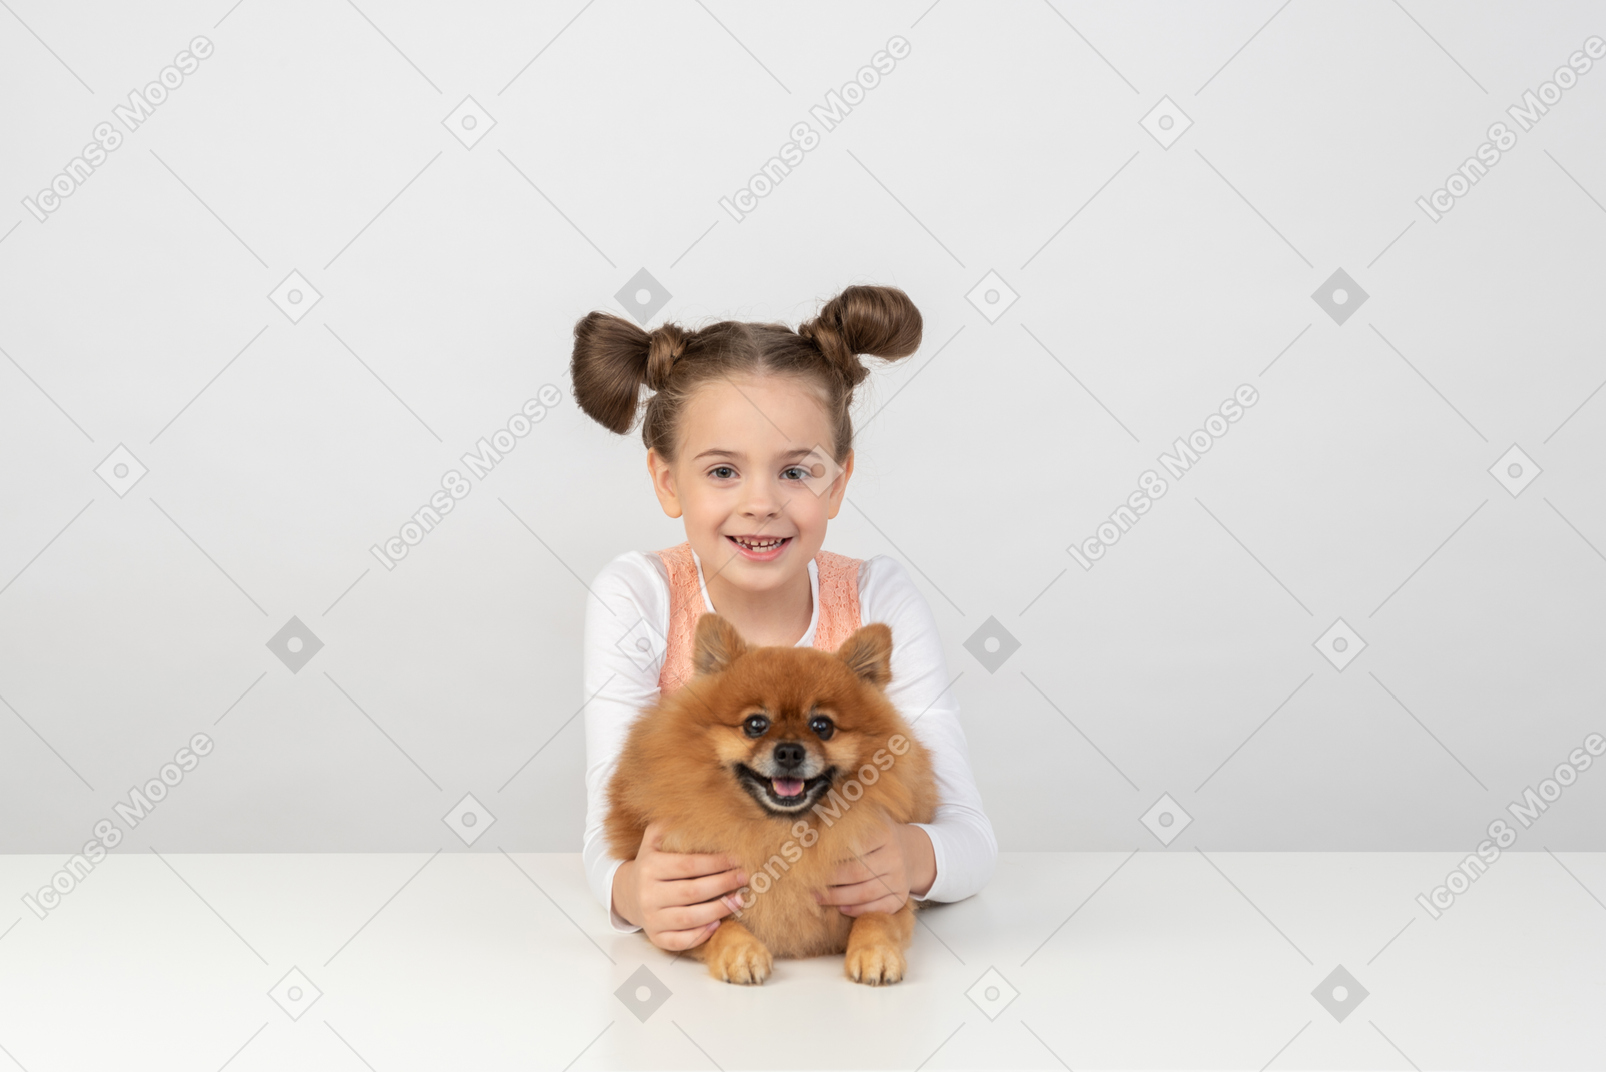 Kid girl holding a spitz